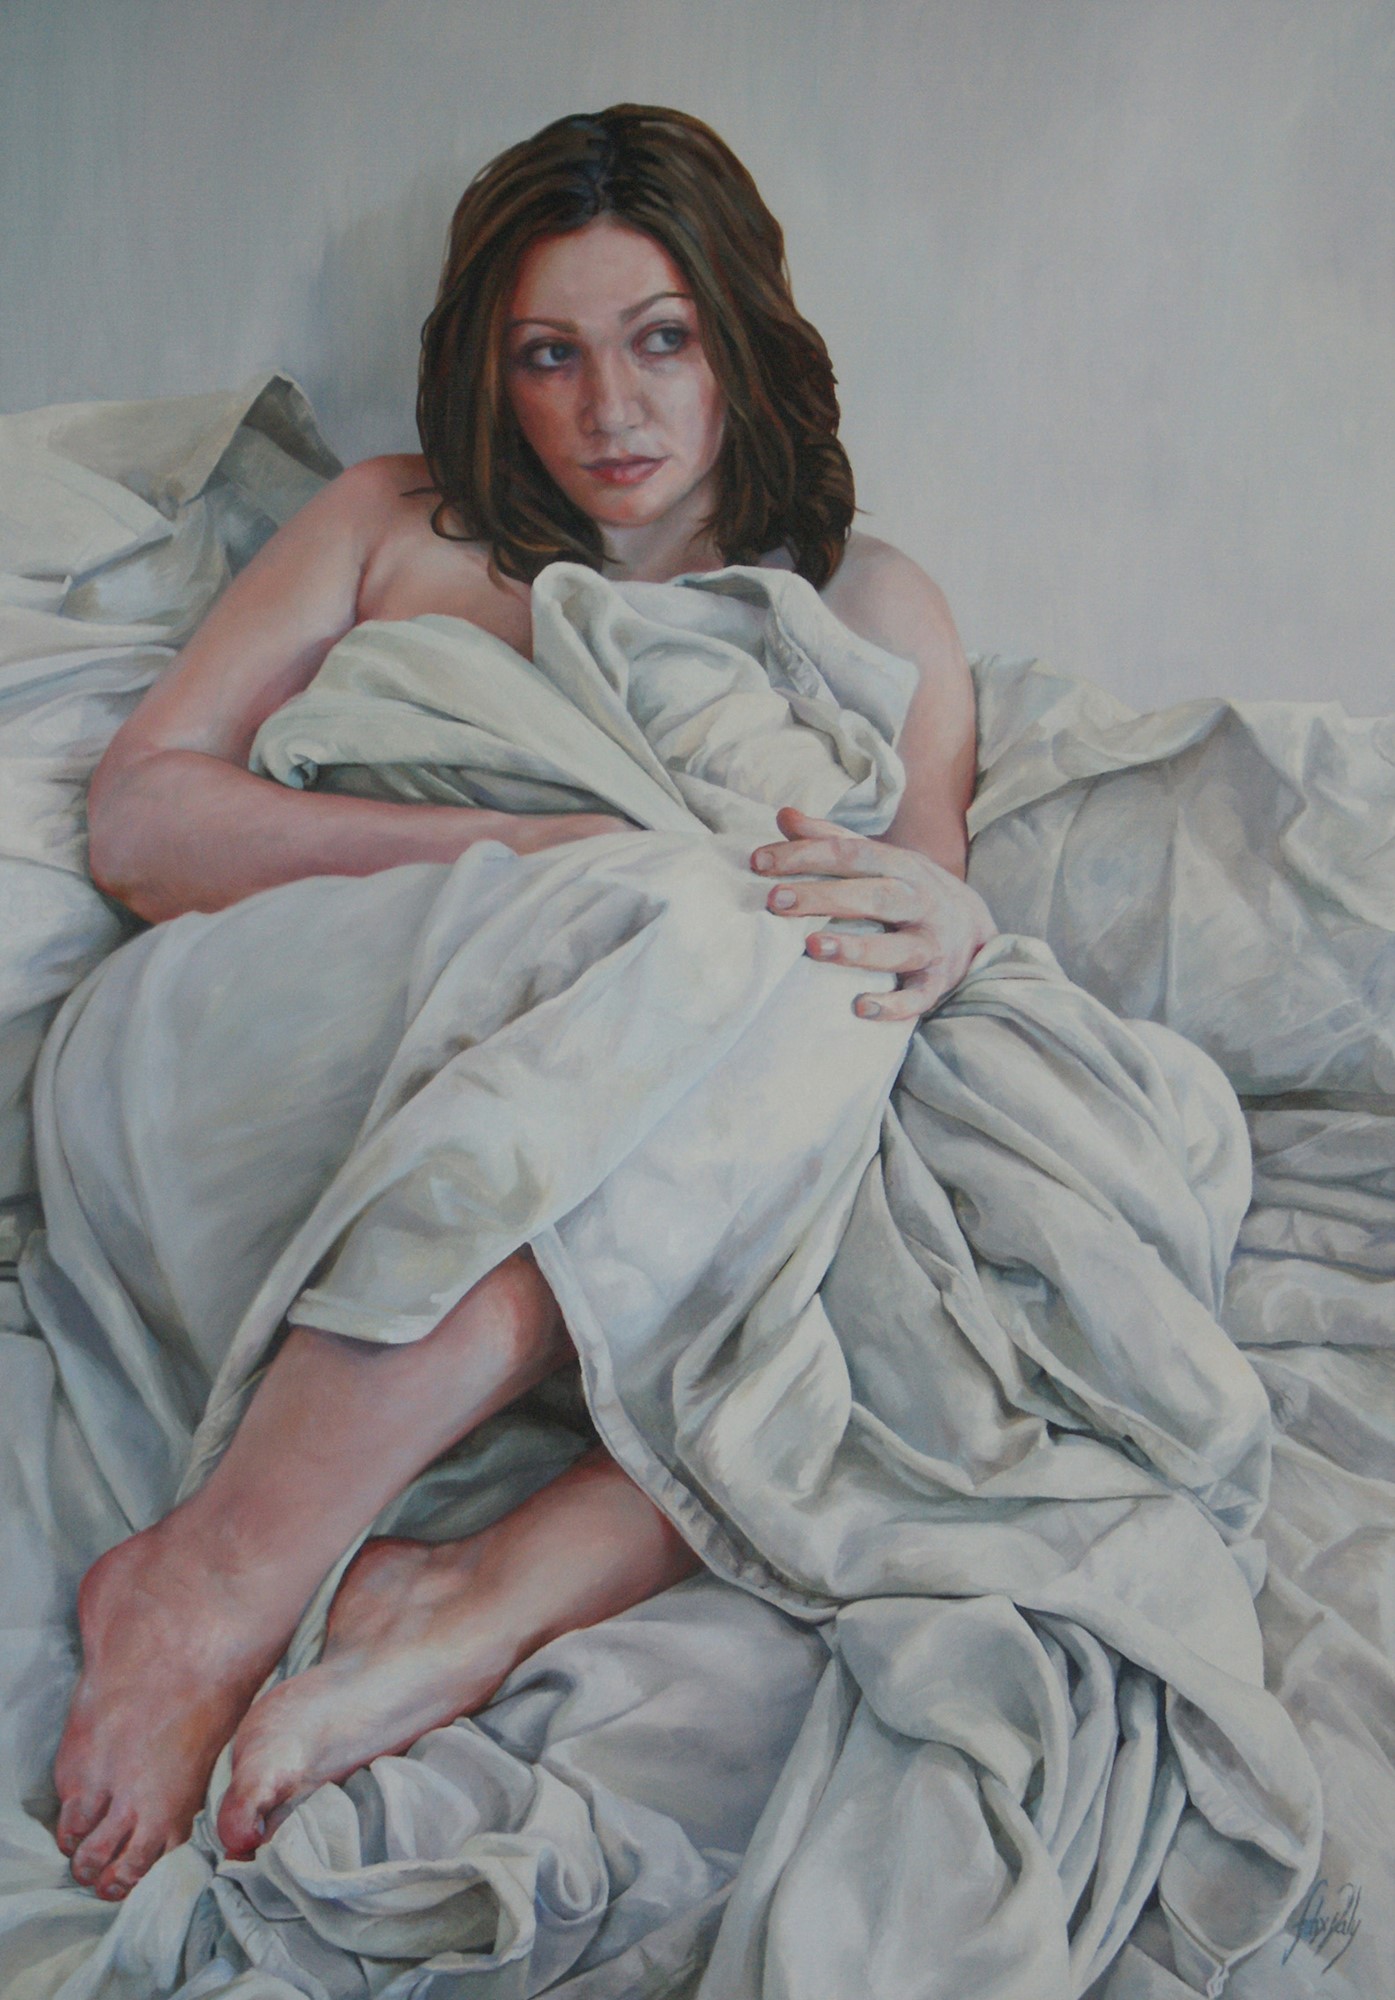 'Lindsay' by artist Felix Daly